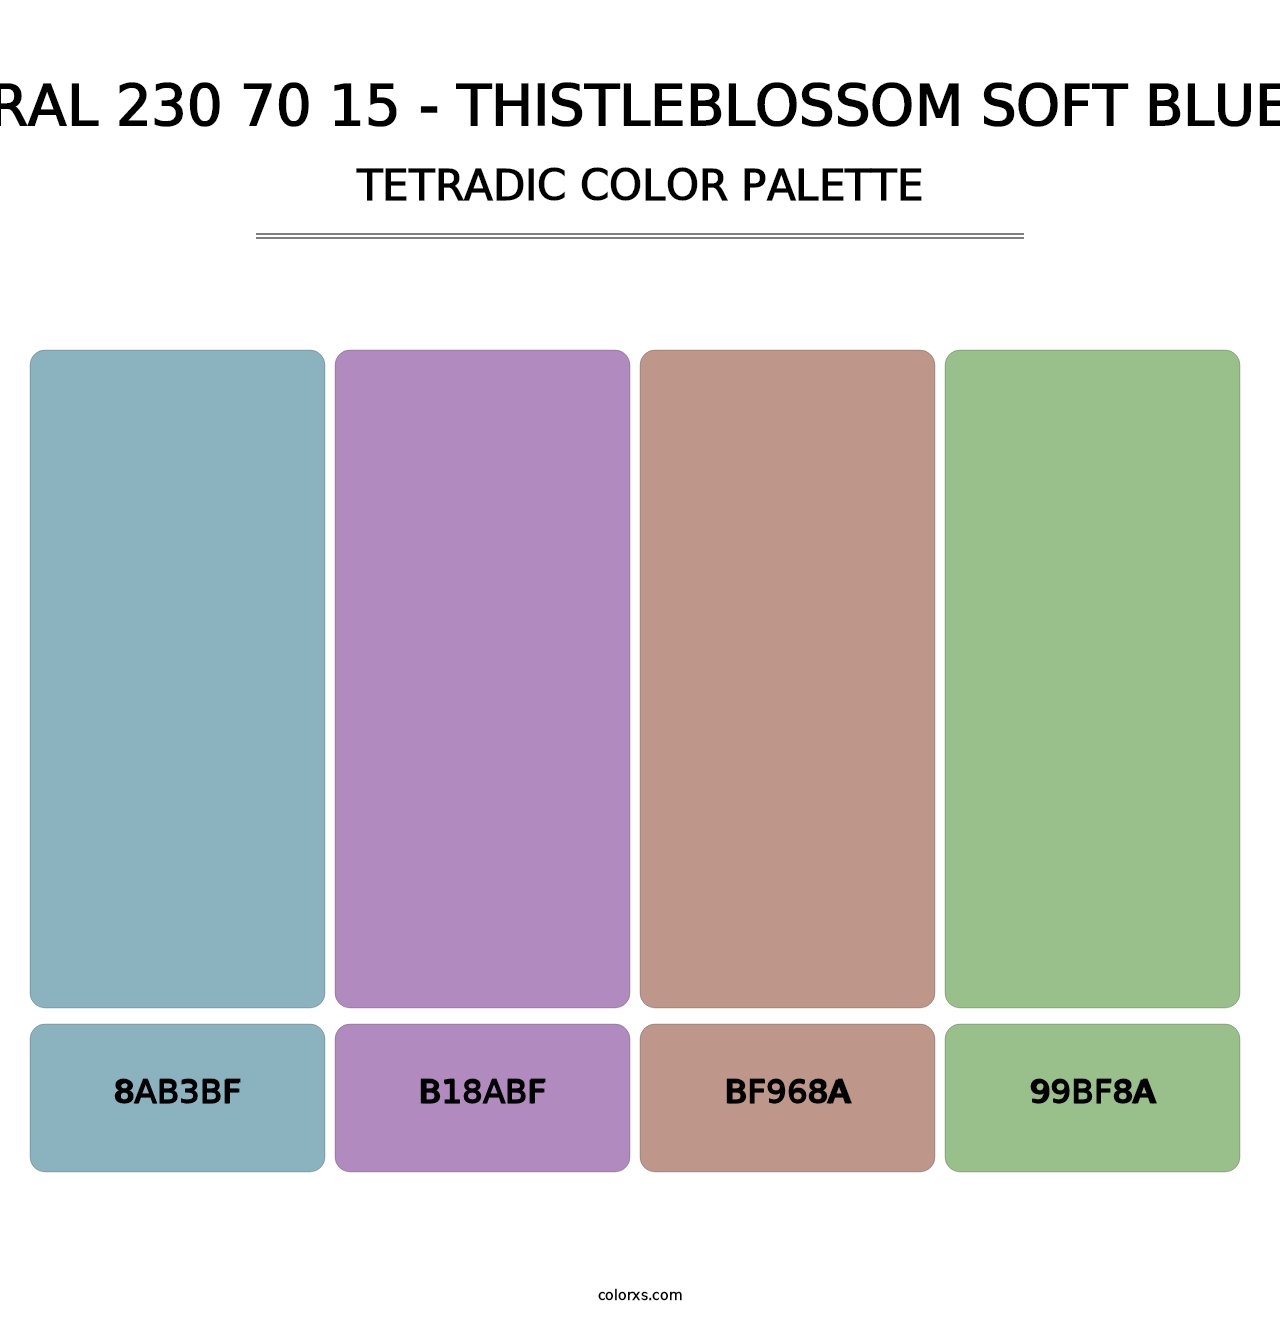 RAL 230 70 15 - Thistleblossom Soft Blue - Tetradic Color Palette